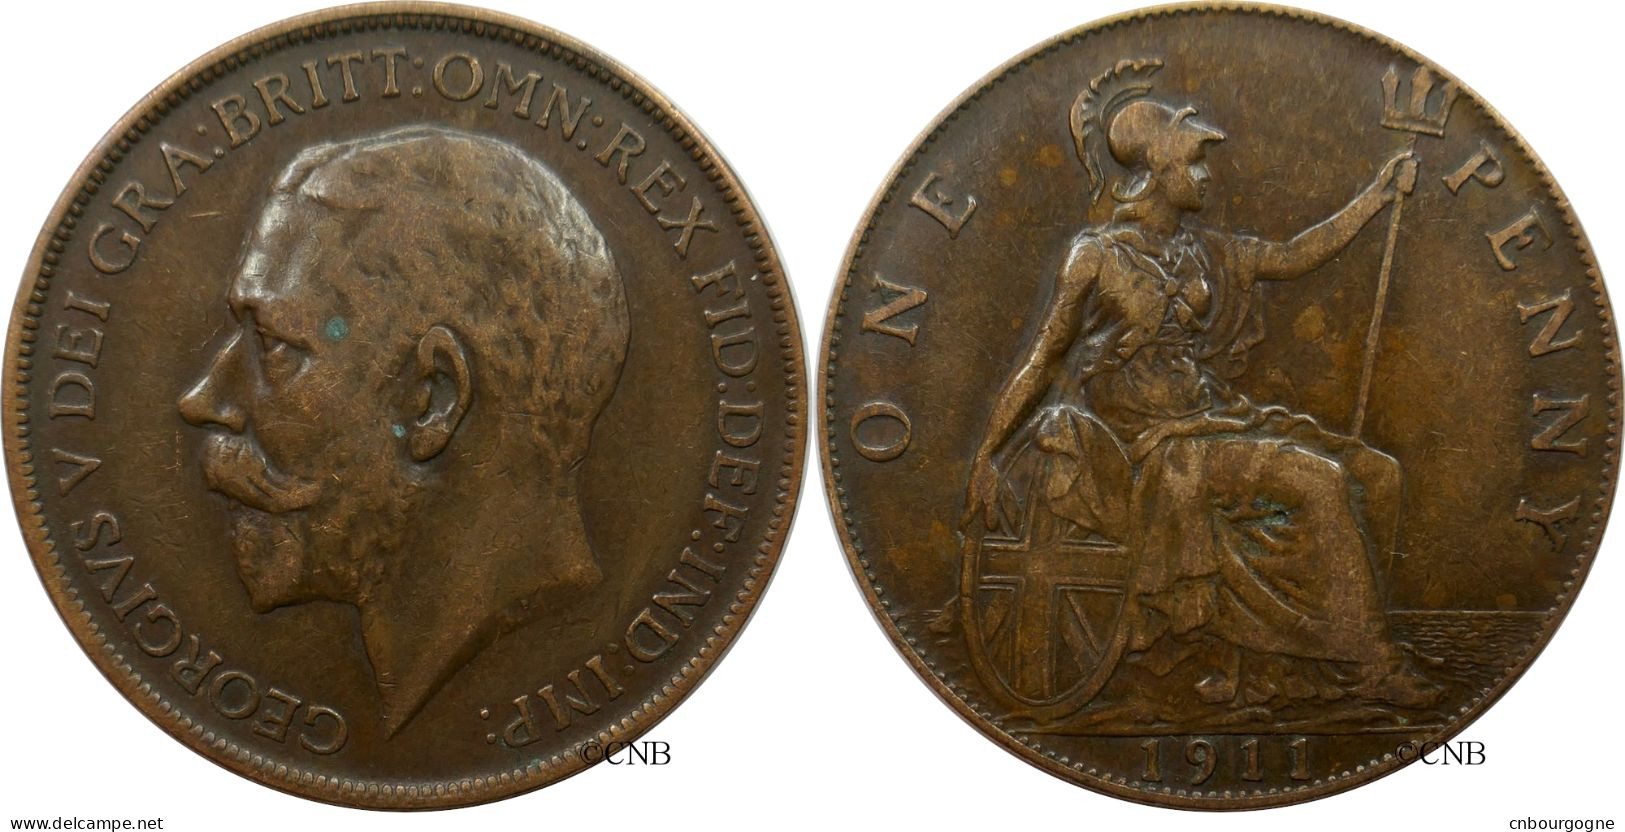 Royaume-Uni - George V - One Penny 1911 - TTB/XF40 - Mon4967 - D. 1 Penny